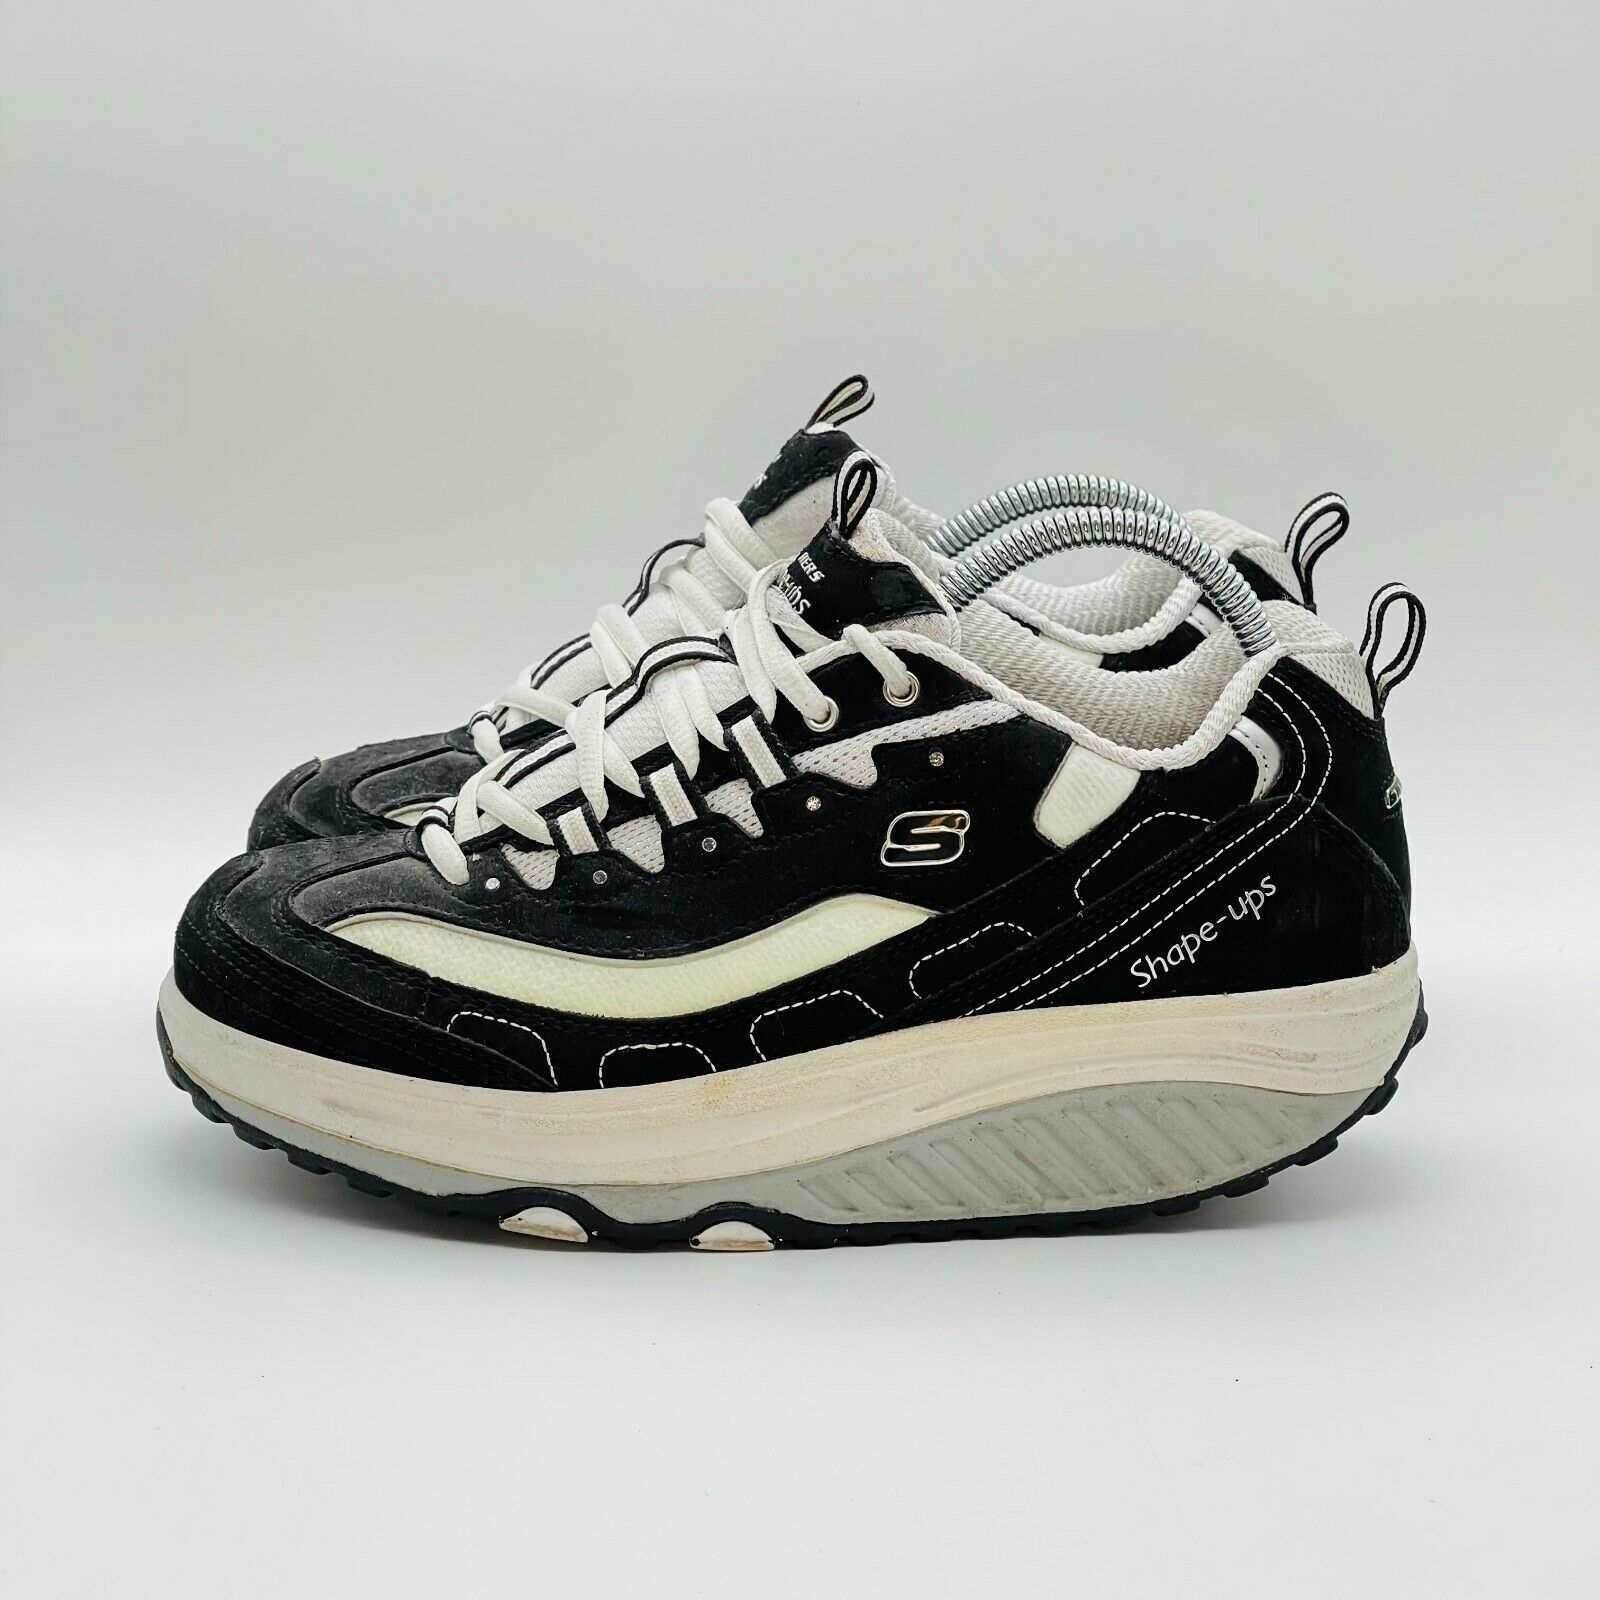 Skechers Shape Ups Shoes 11809 Women's Walking Toning Black White Size 8